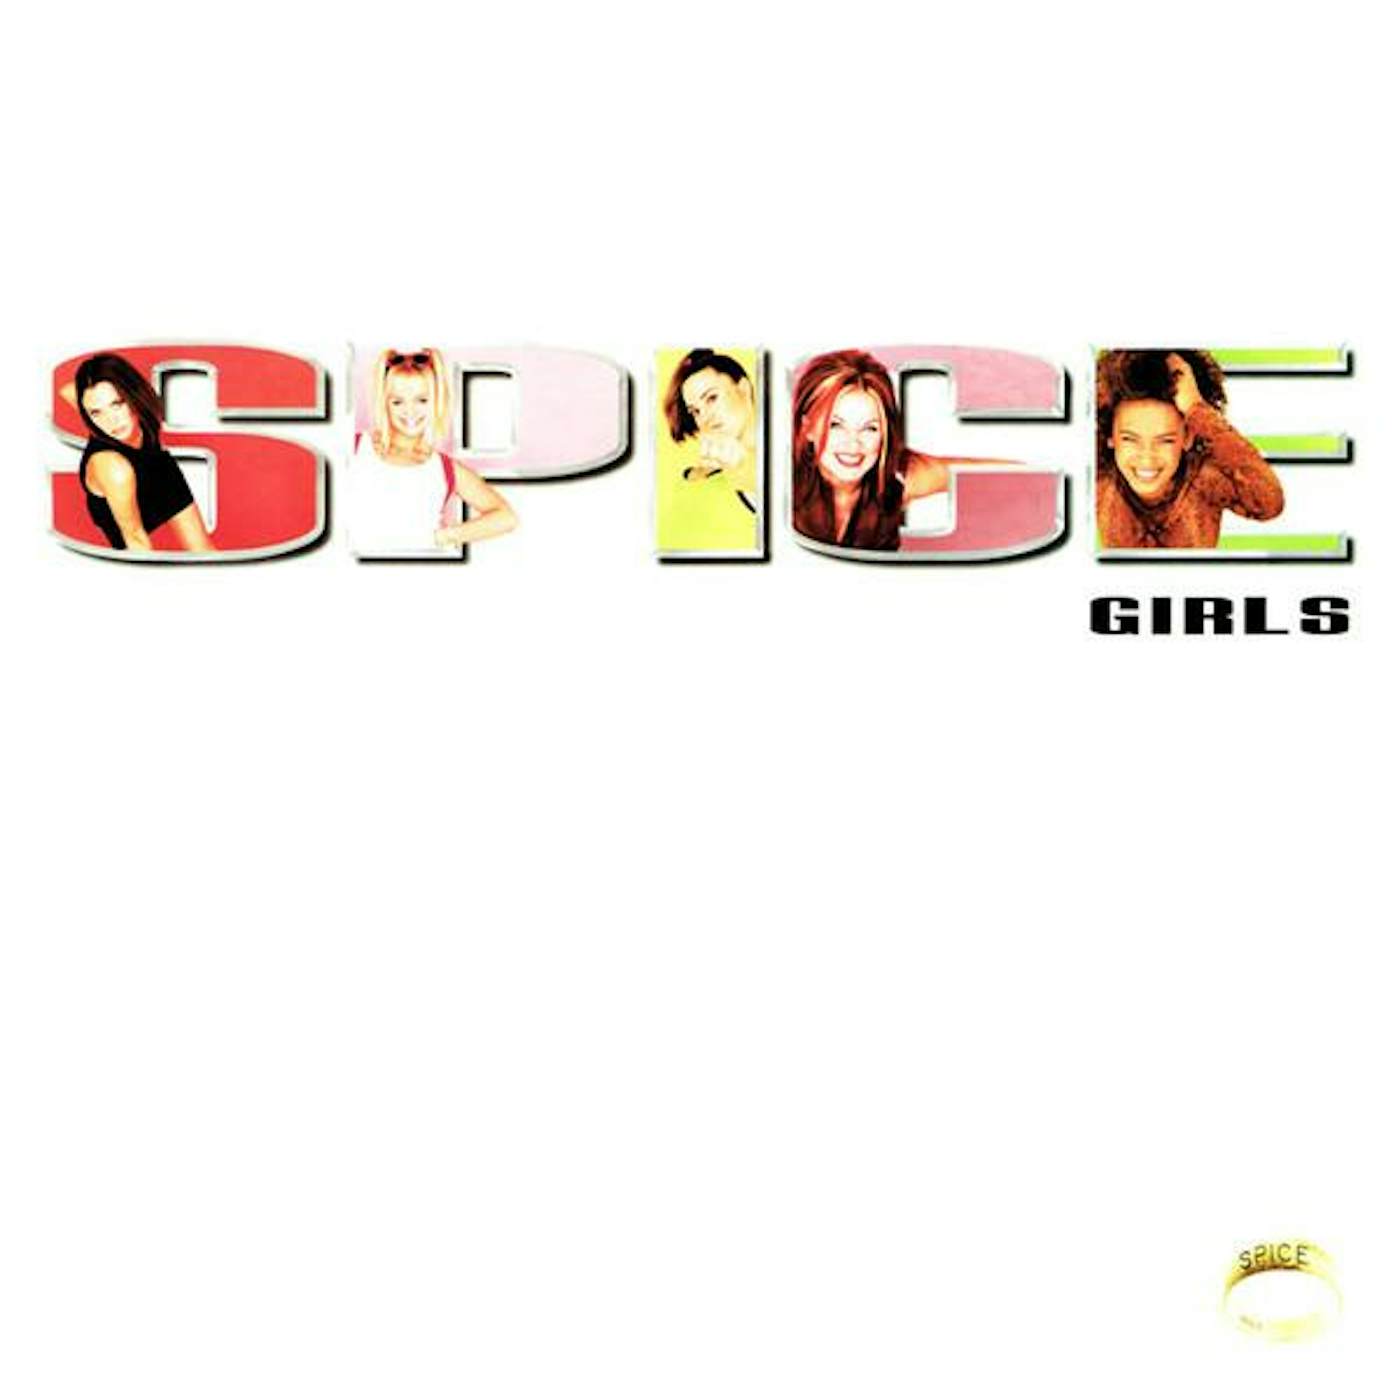 Spice Girls SPICE Vinyl Record